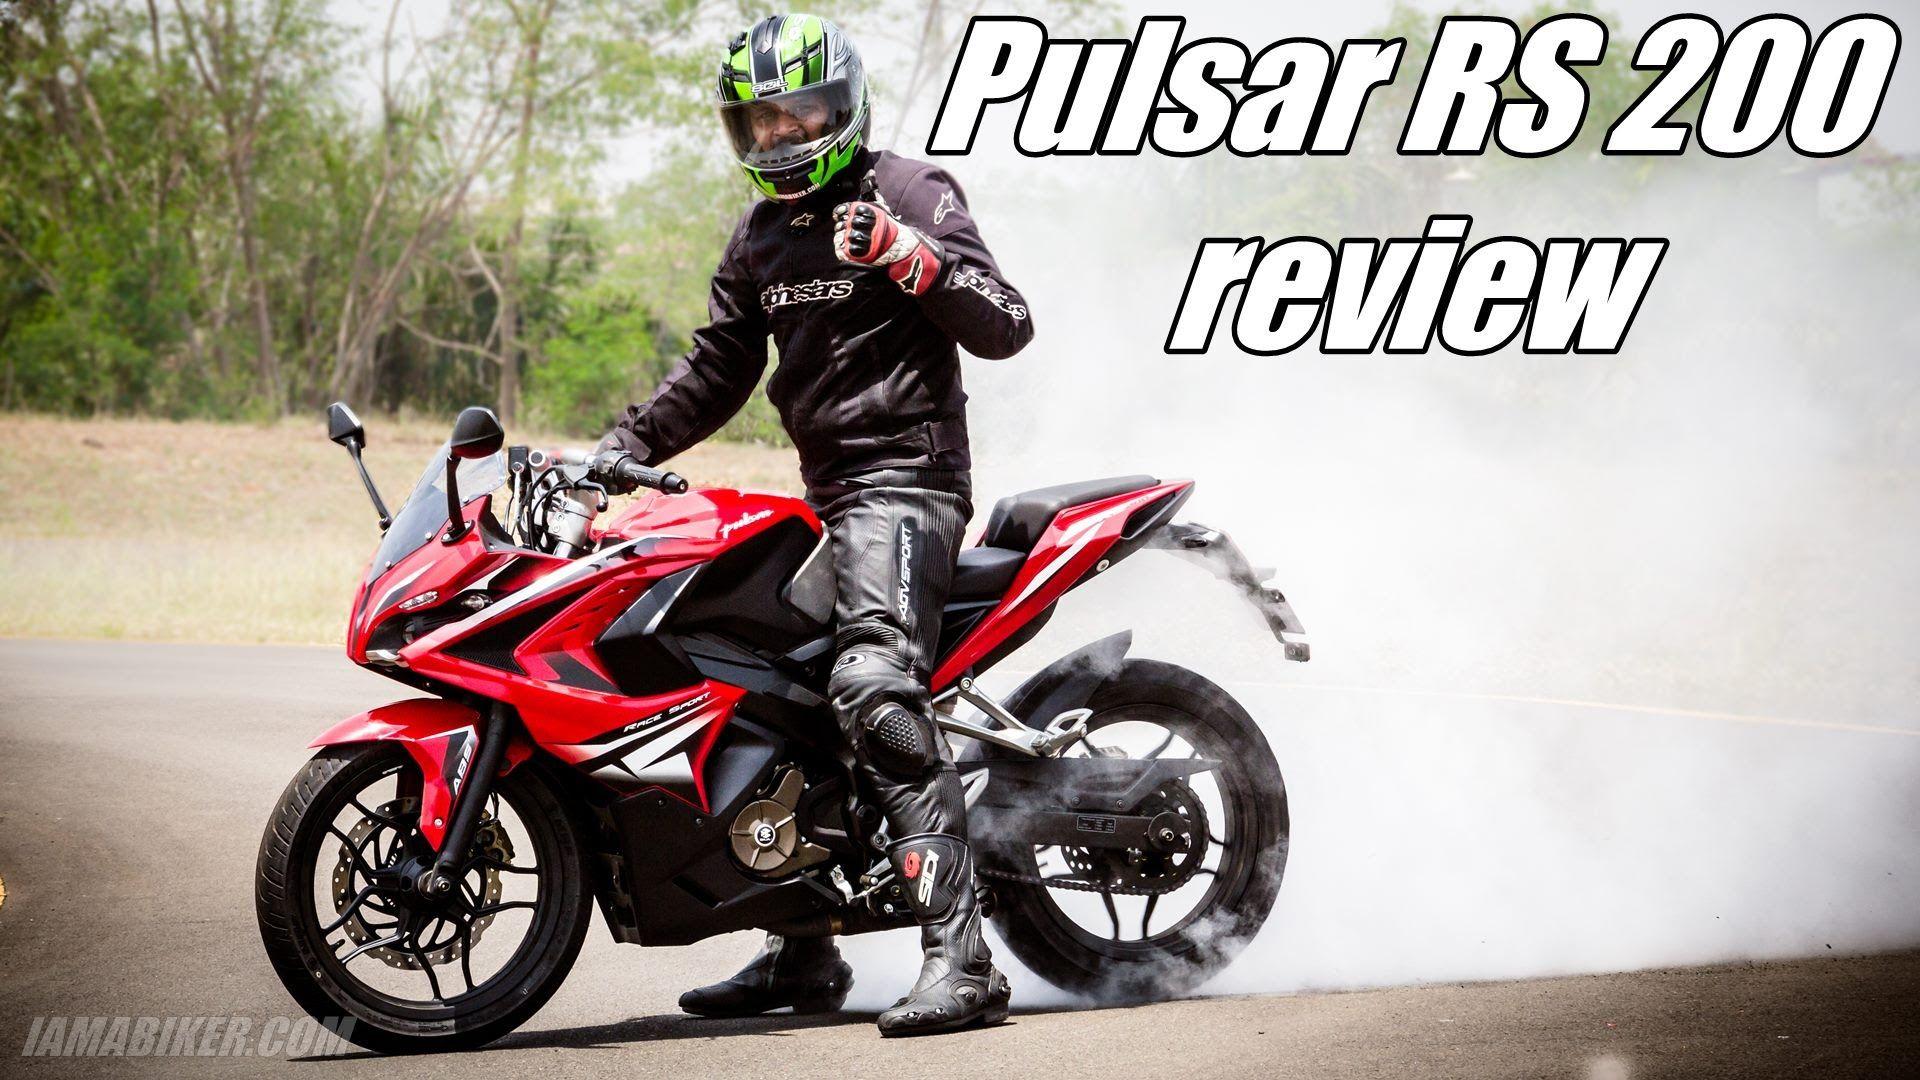 Pulsar RS 200 review